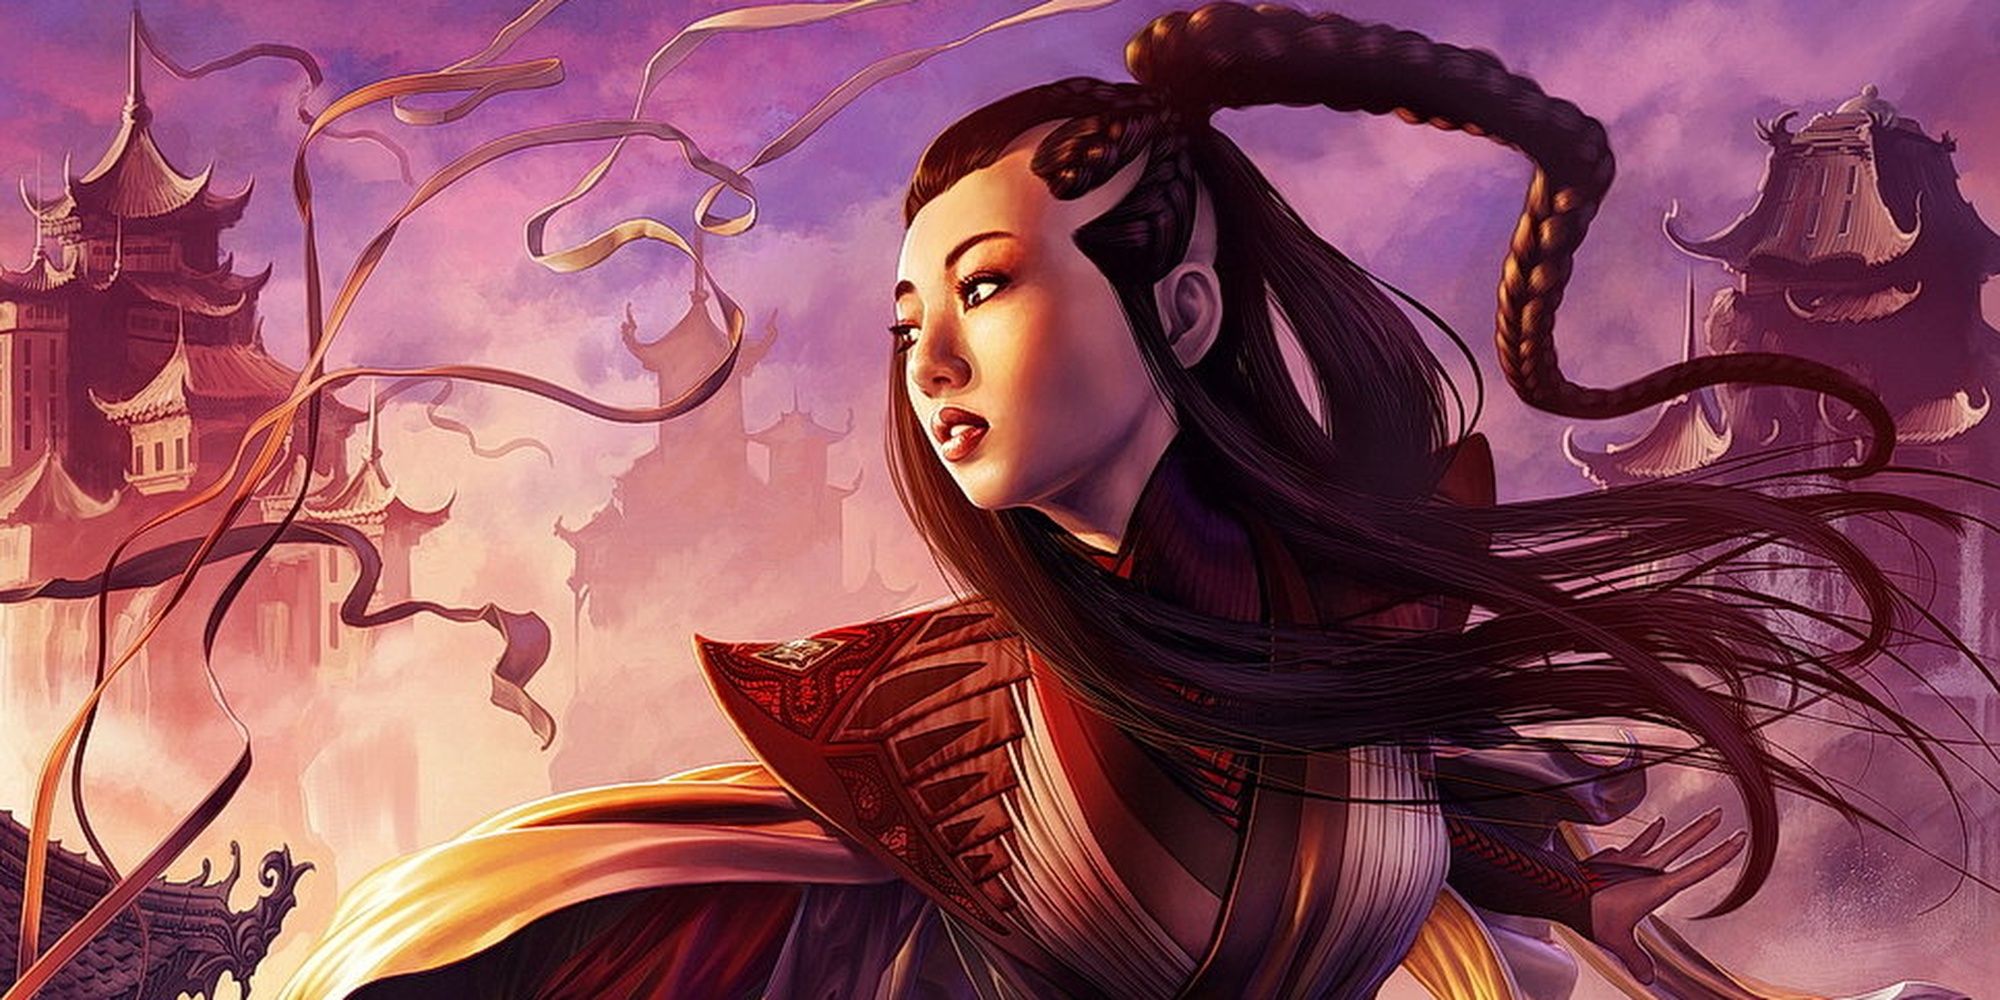 Female Samurai Warrior With Braid